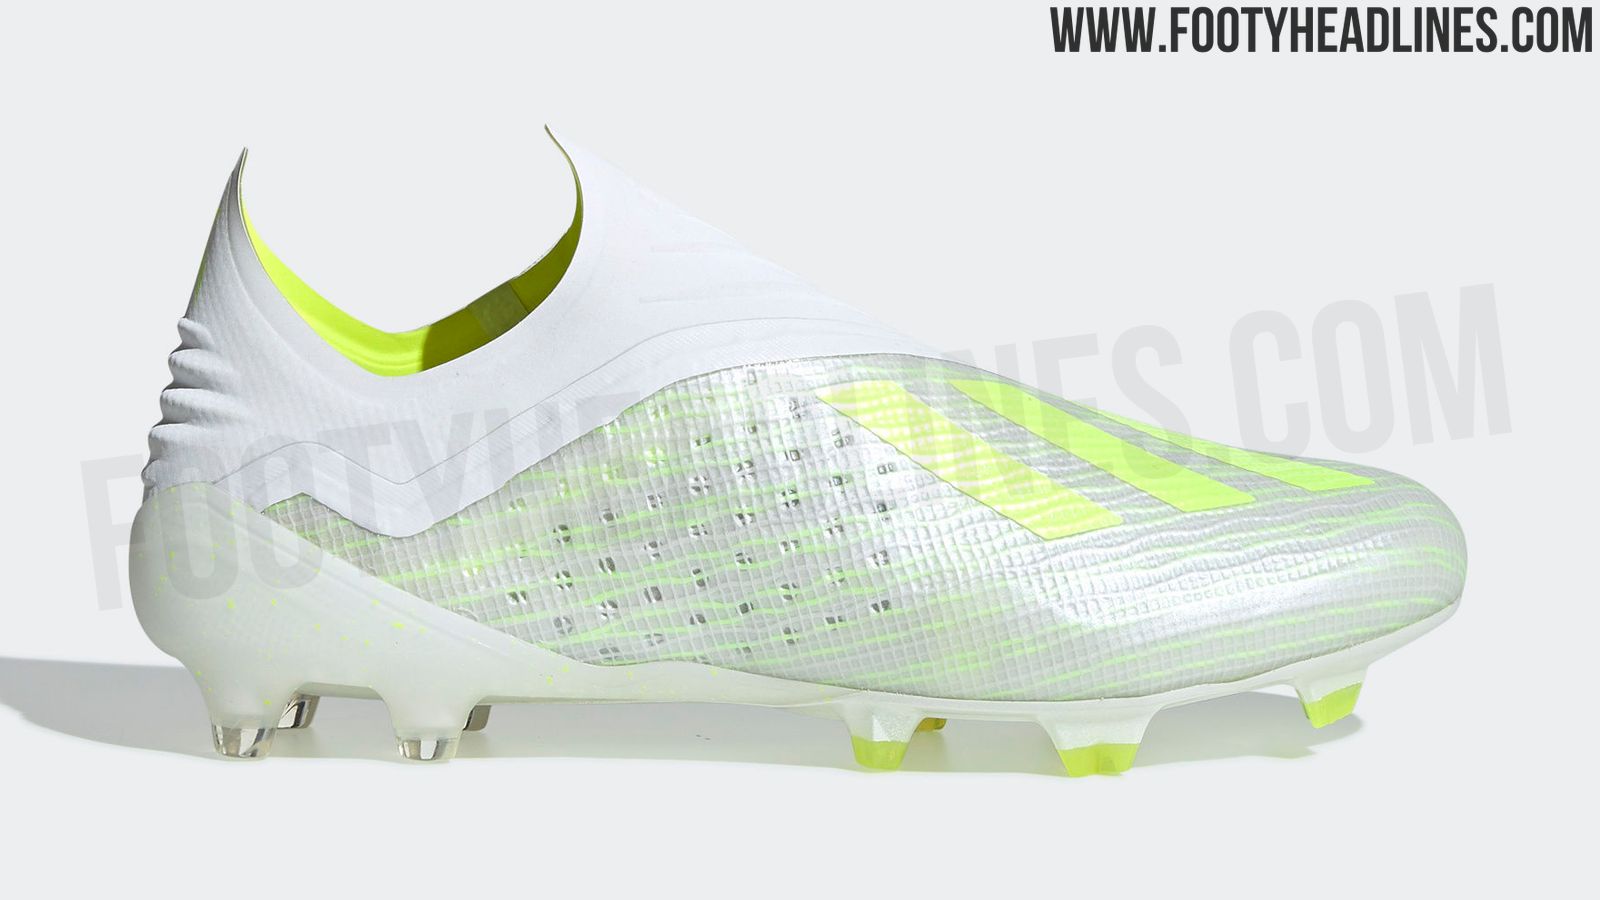 football boots adidas white